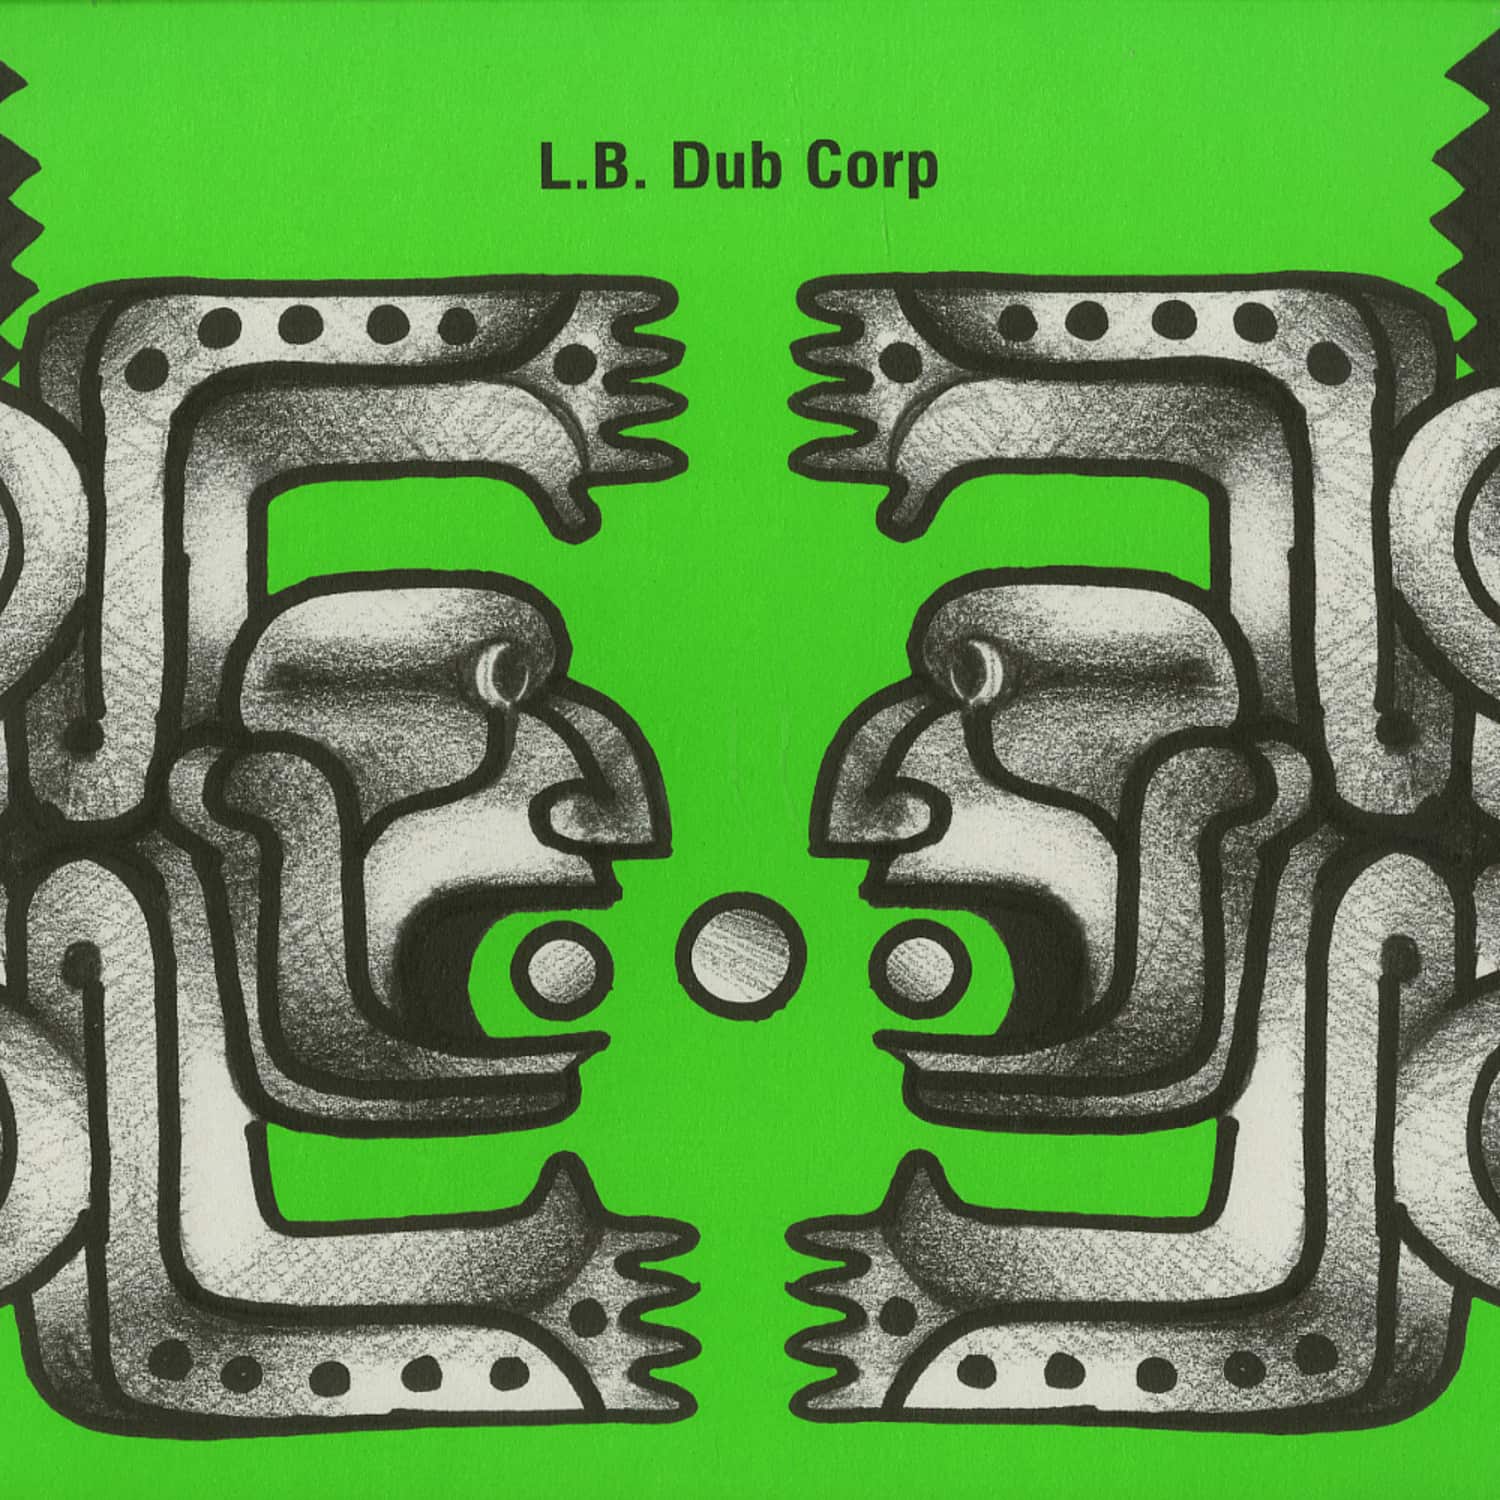 L.B. Dub Corp - TURNERS HOUSE